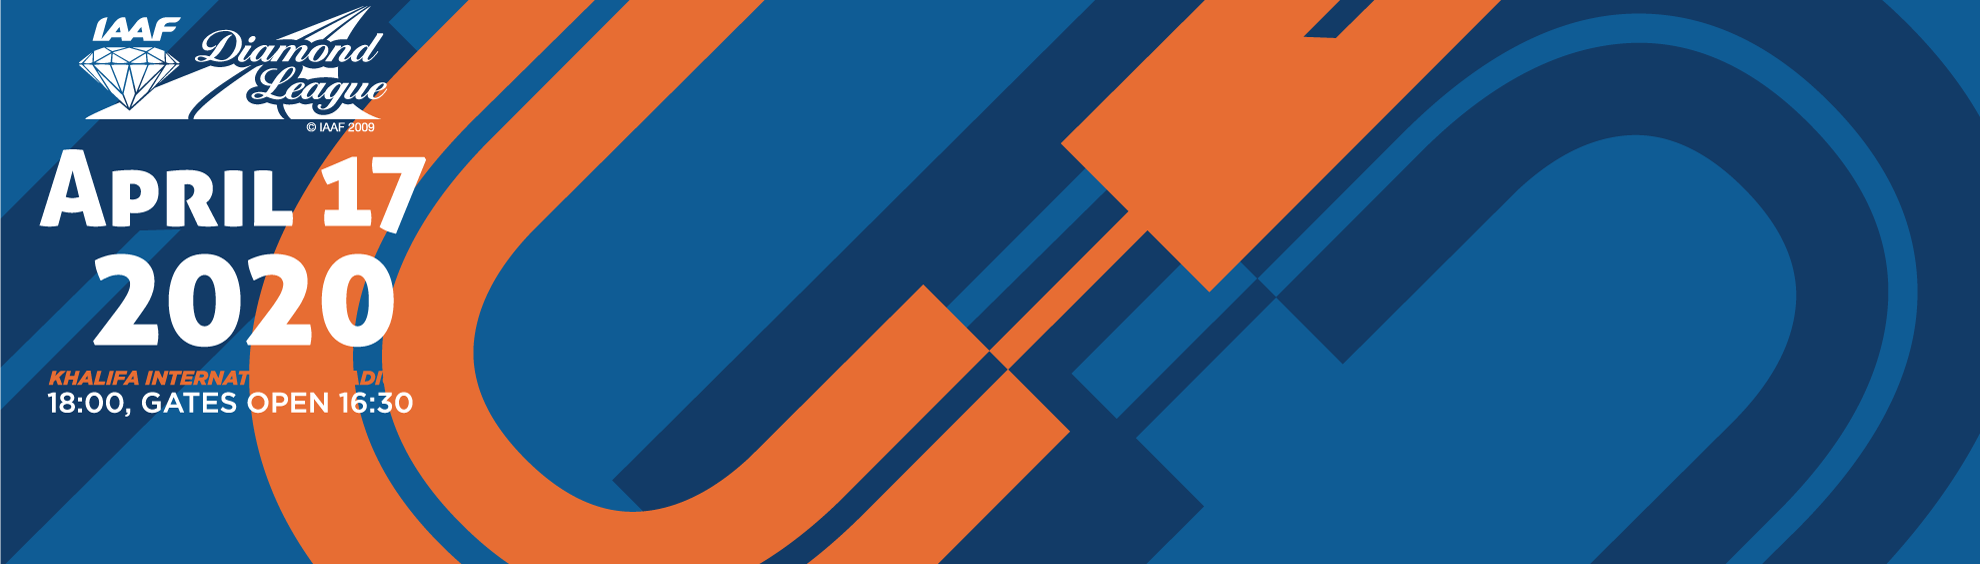 Image result for diamond league doha 2019 logo